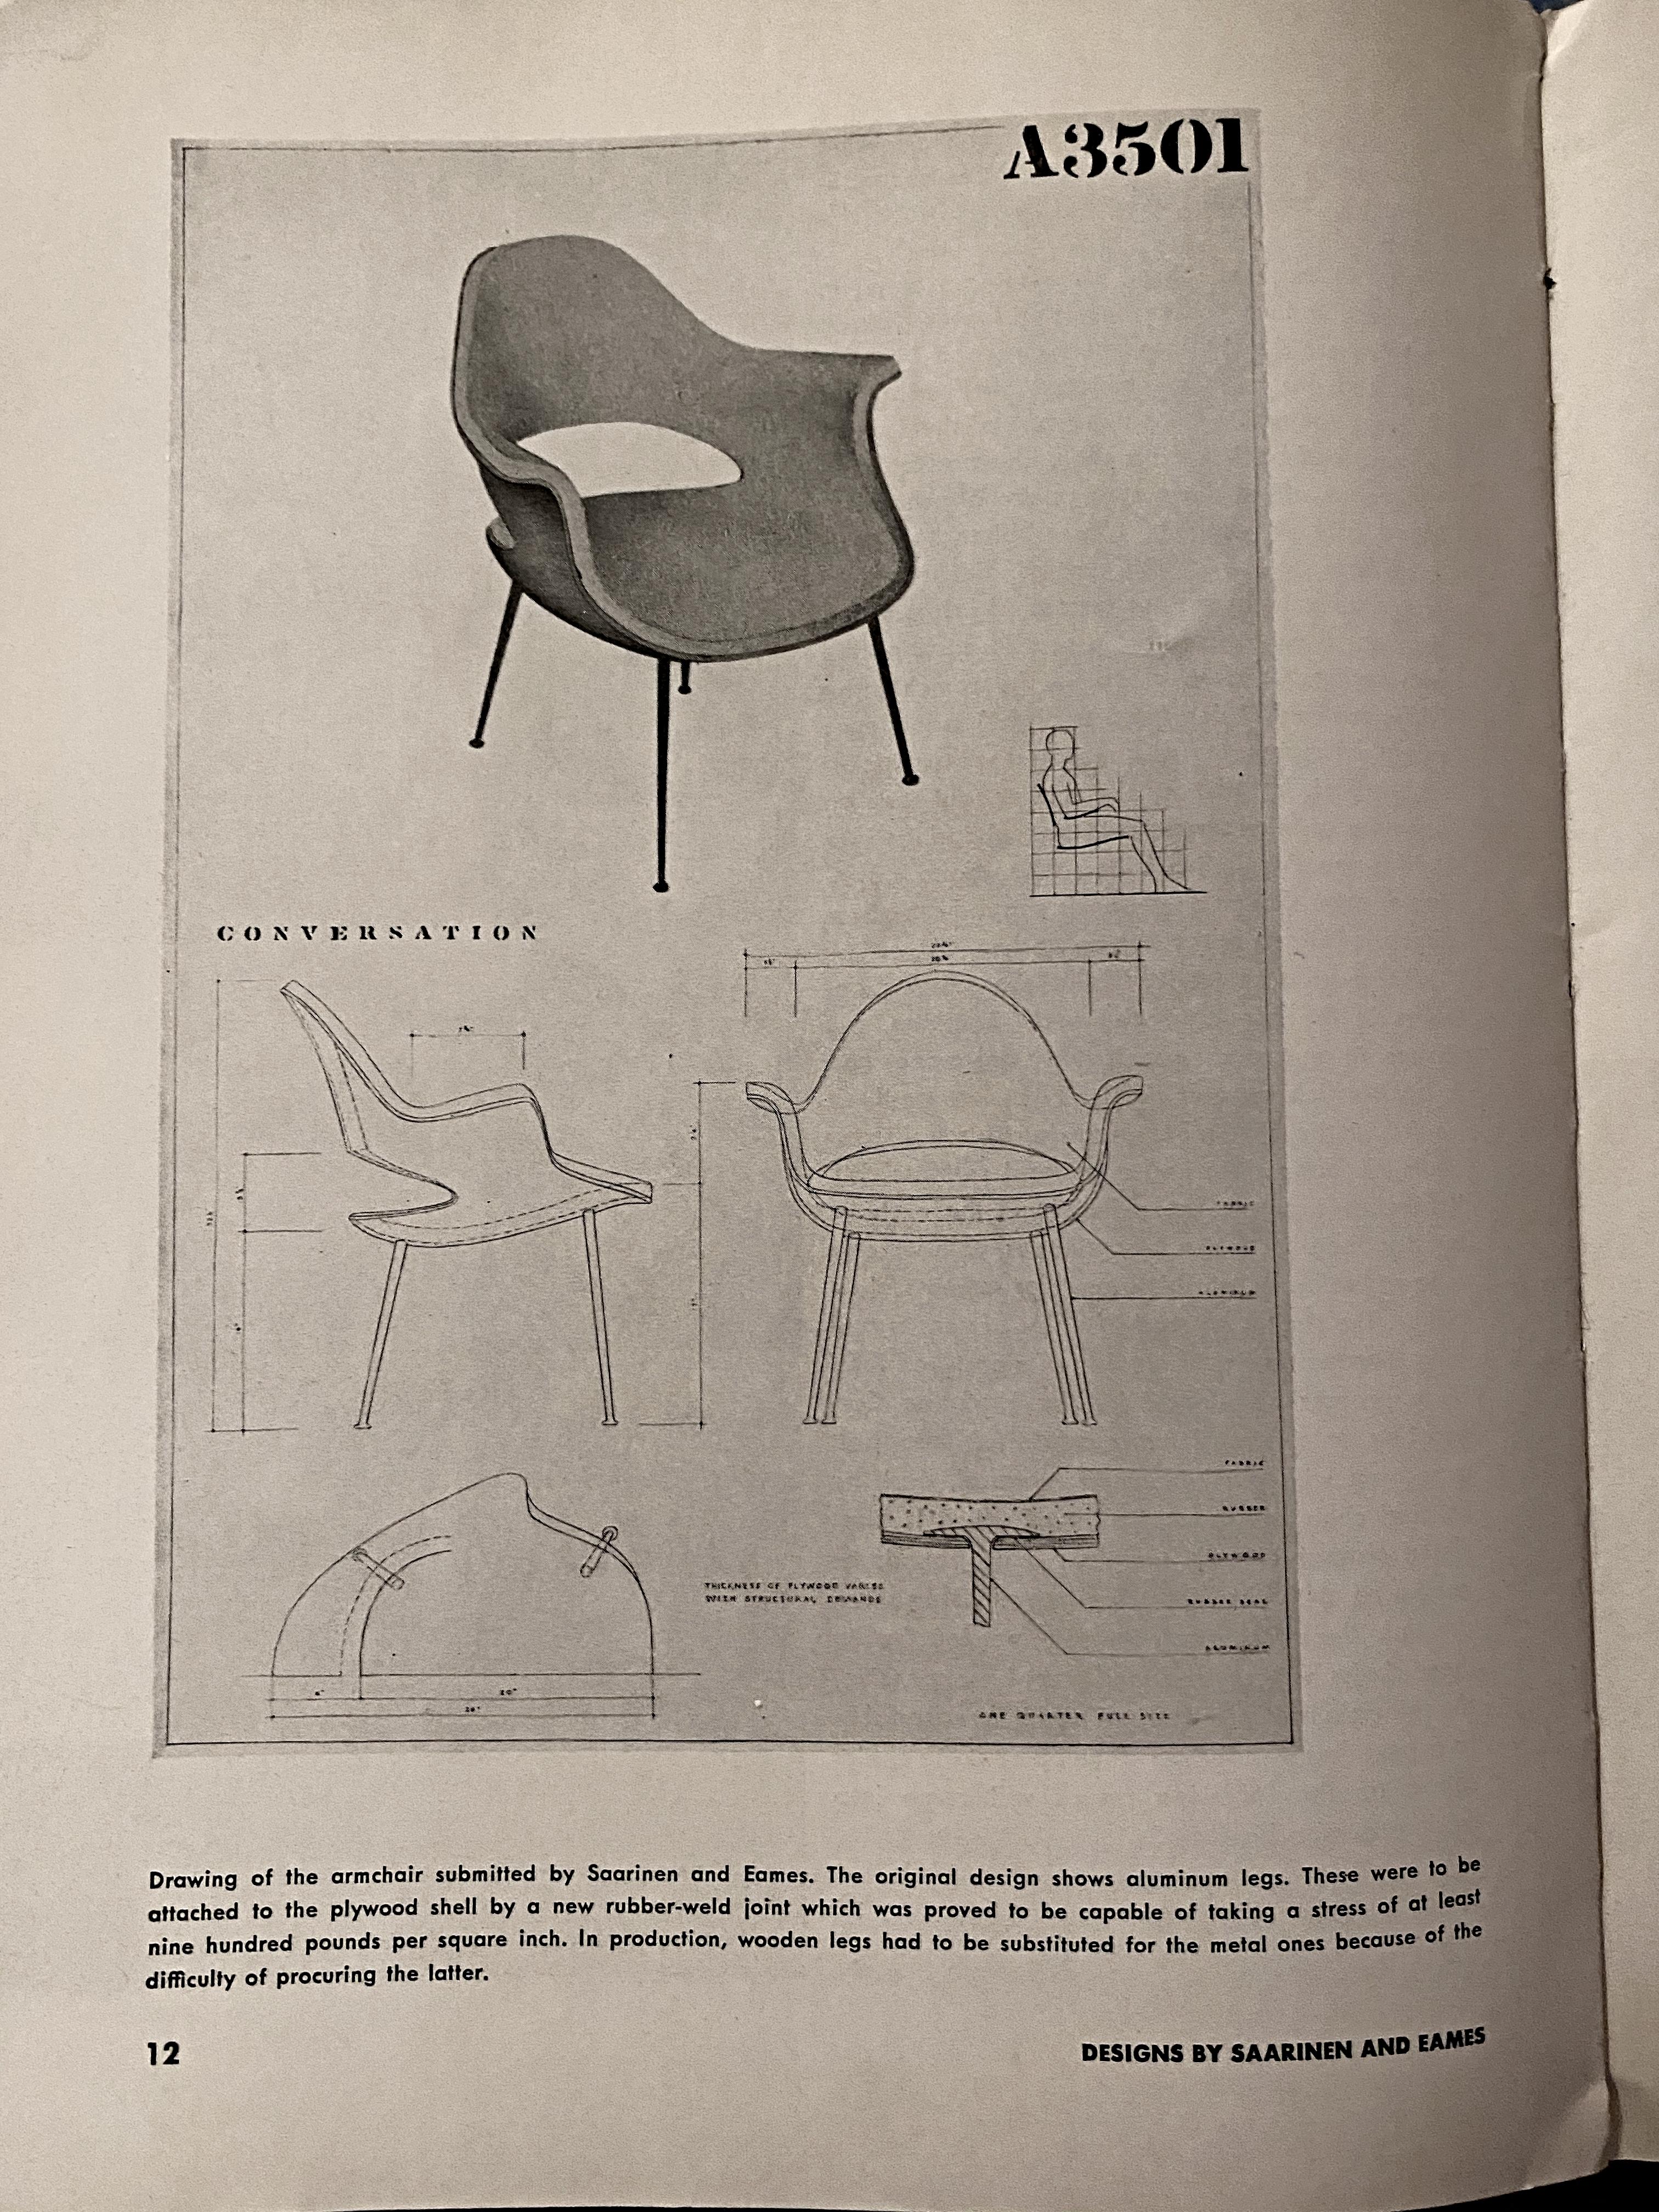 Fabric Charles Eames & Eero Saarinen “Organic Chair” Model No. A3501, 1950, USA For Sale